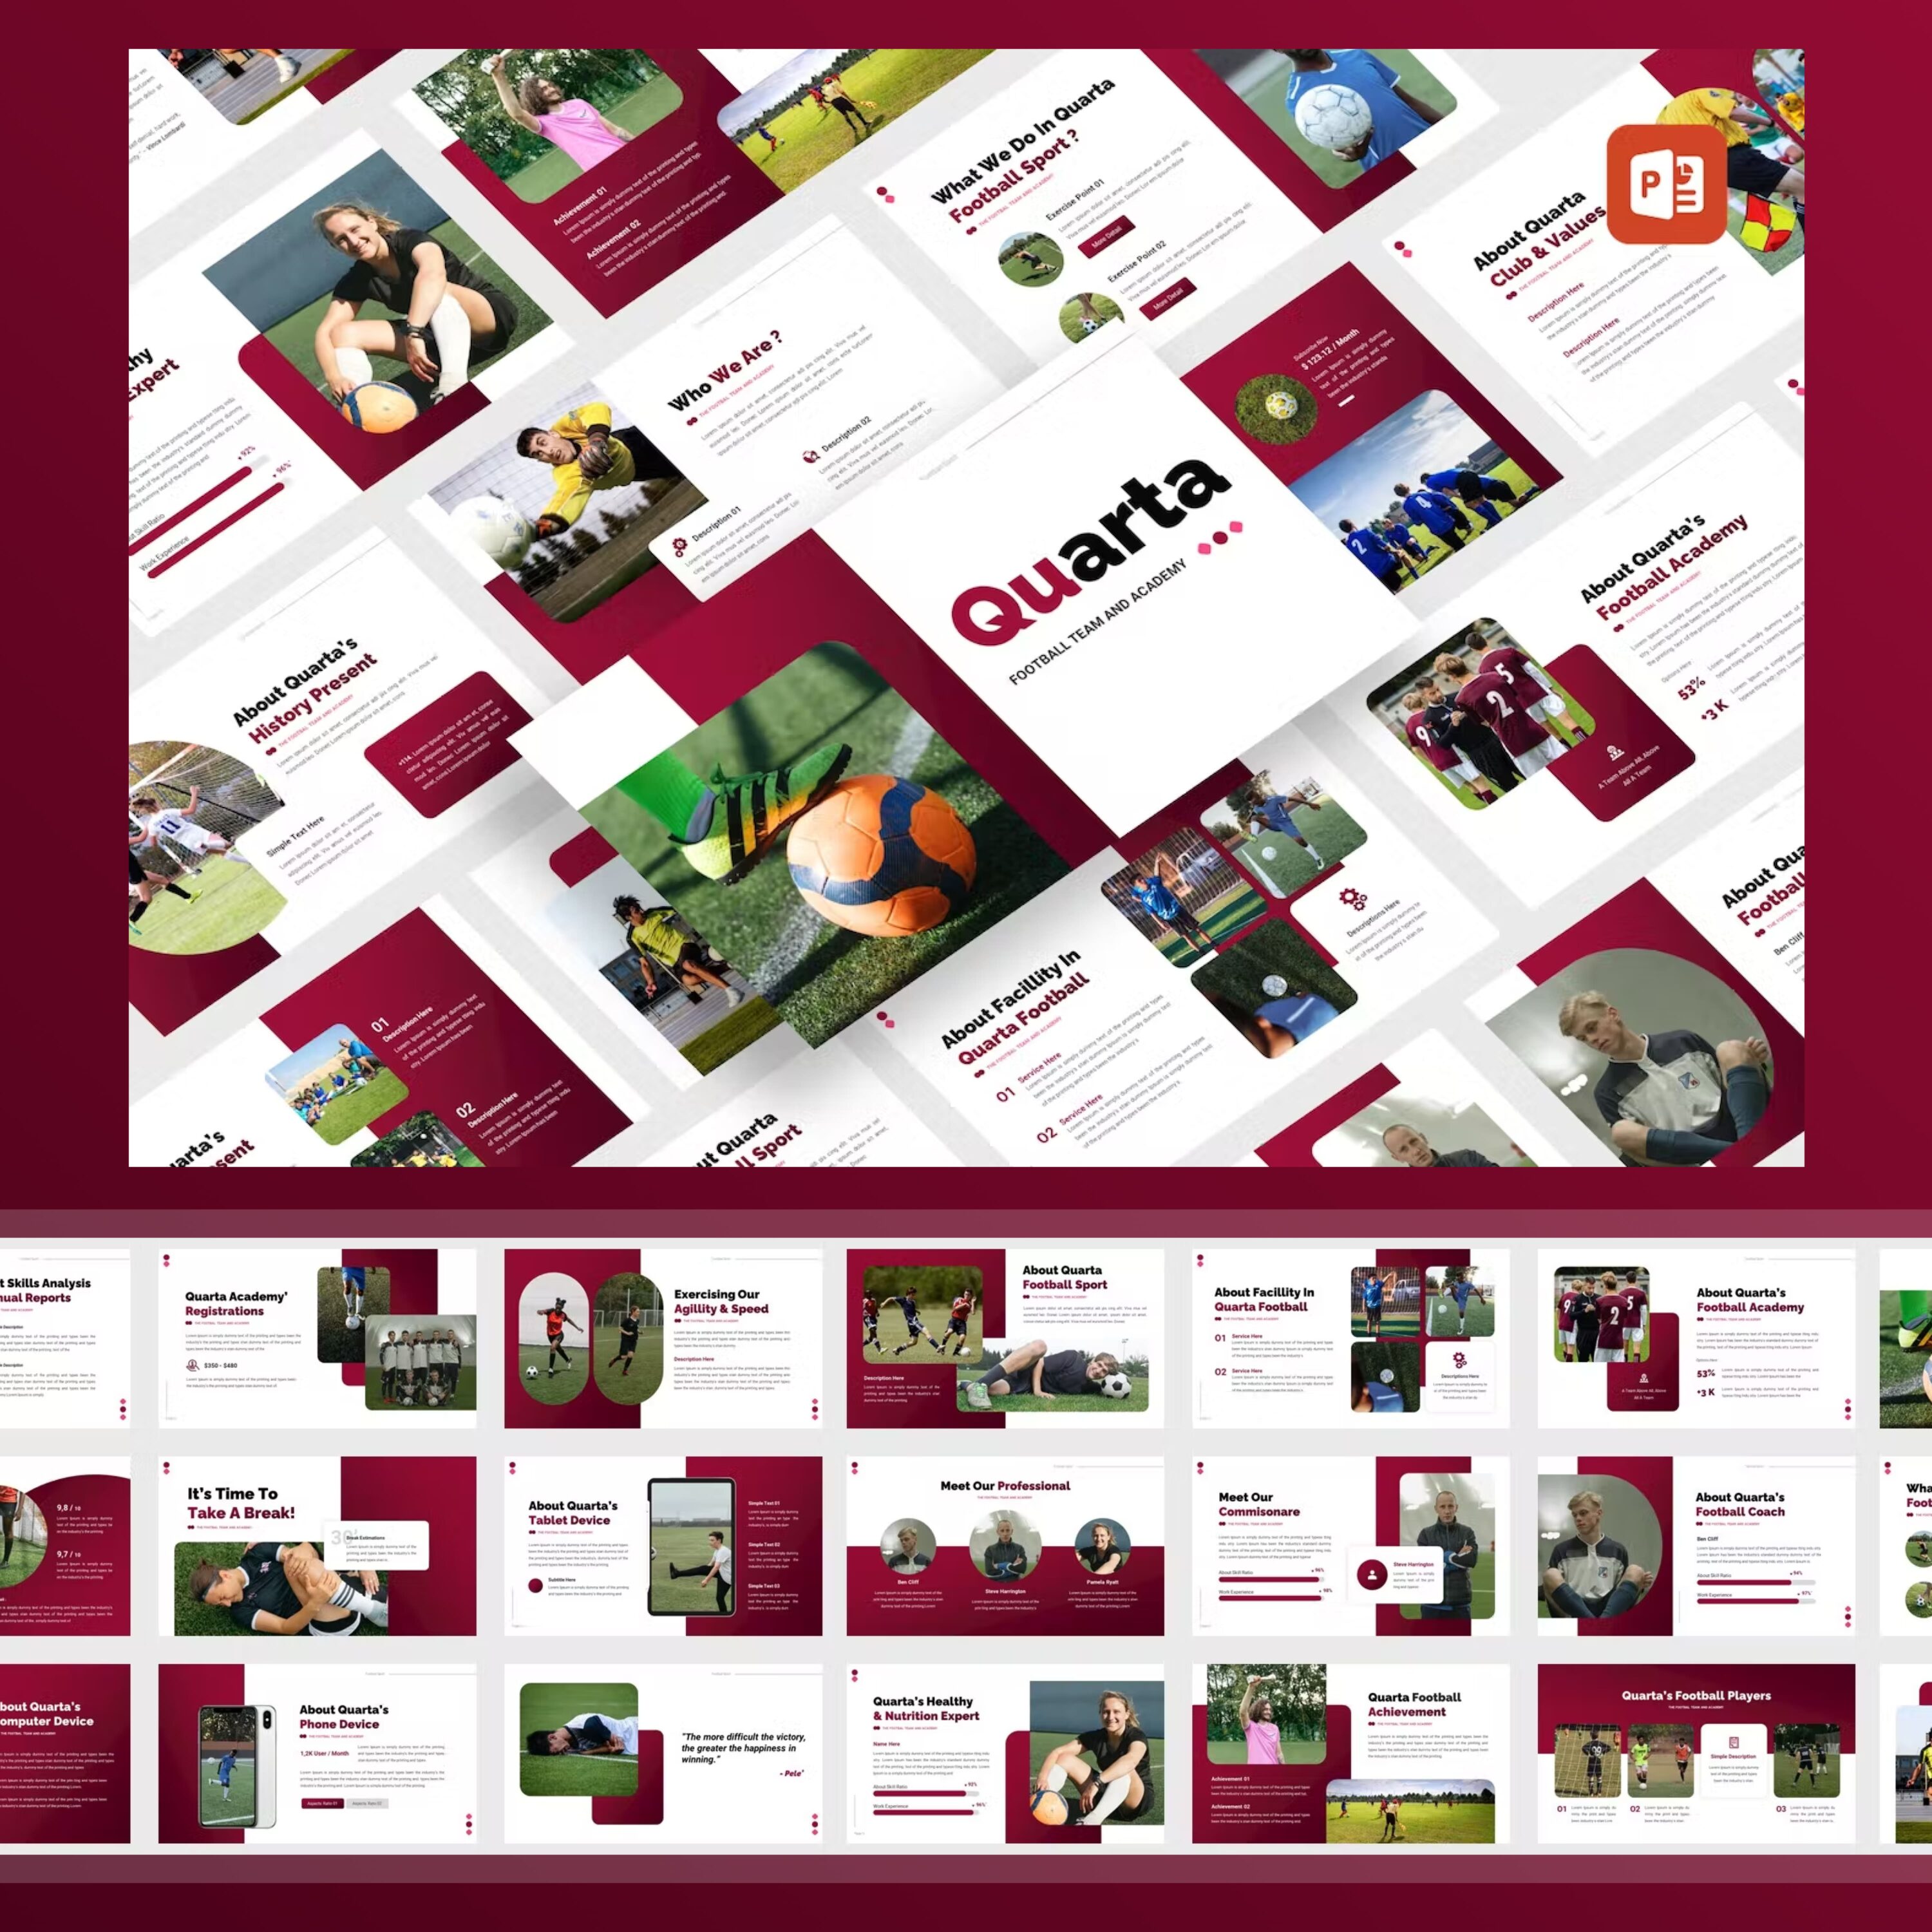 Quarta Footbal Sport PowerPoint Template from CocoTemplates.